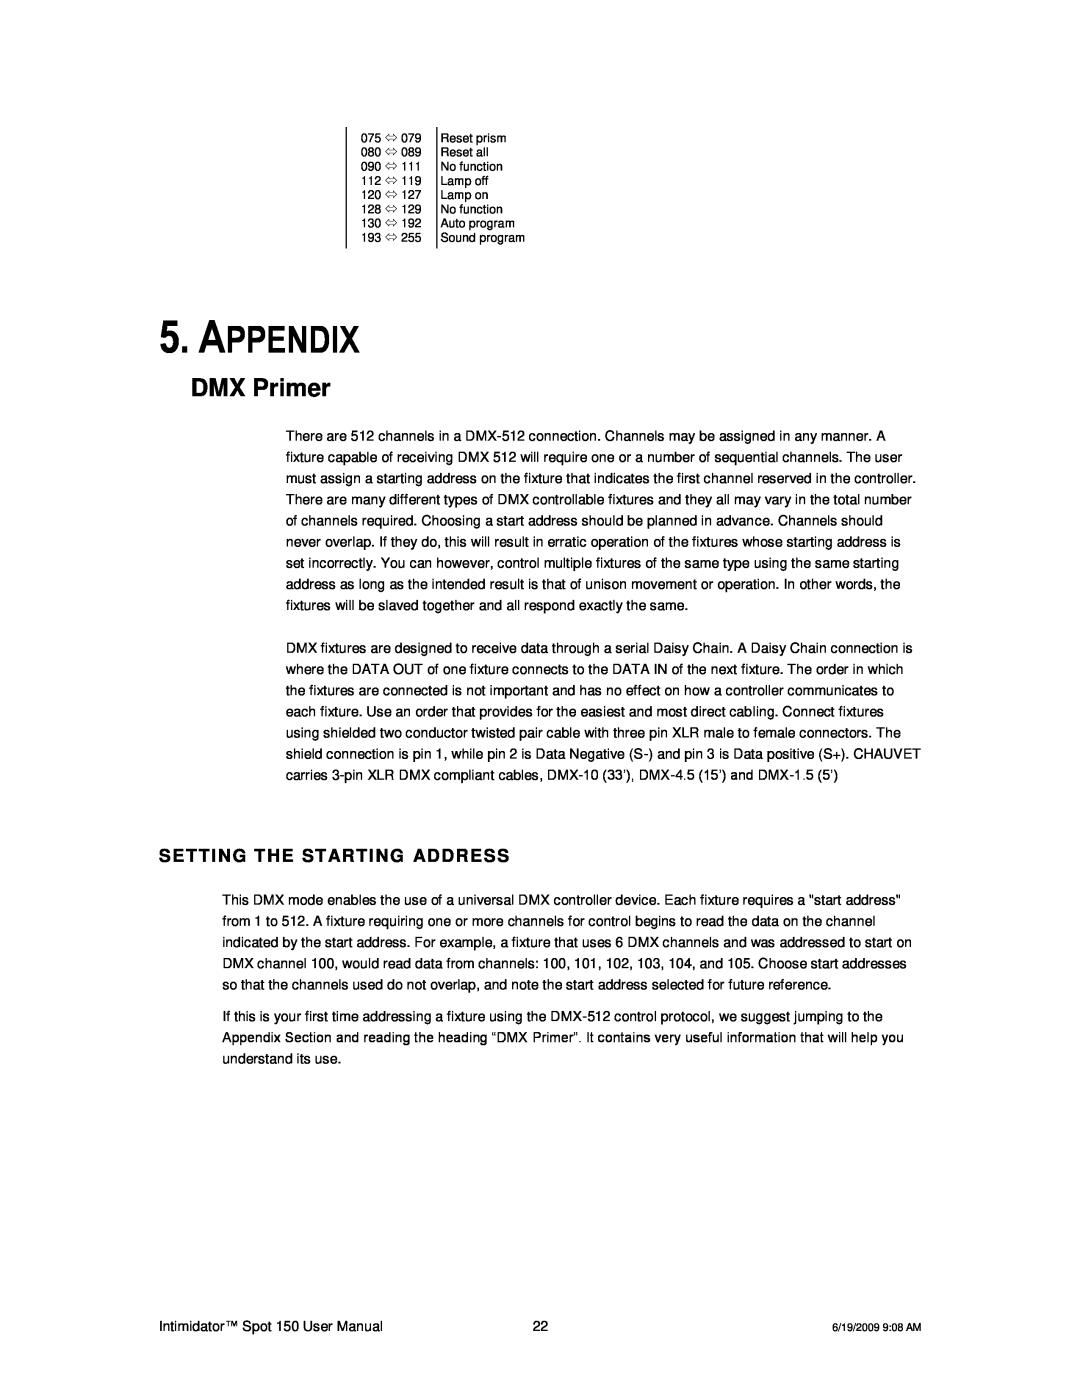 Chauvet 150 user manual Appendix, DMX Primer, Setting T He St Arting Address 